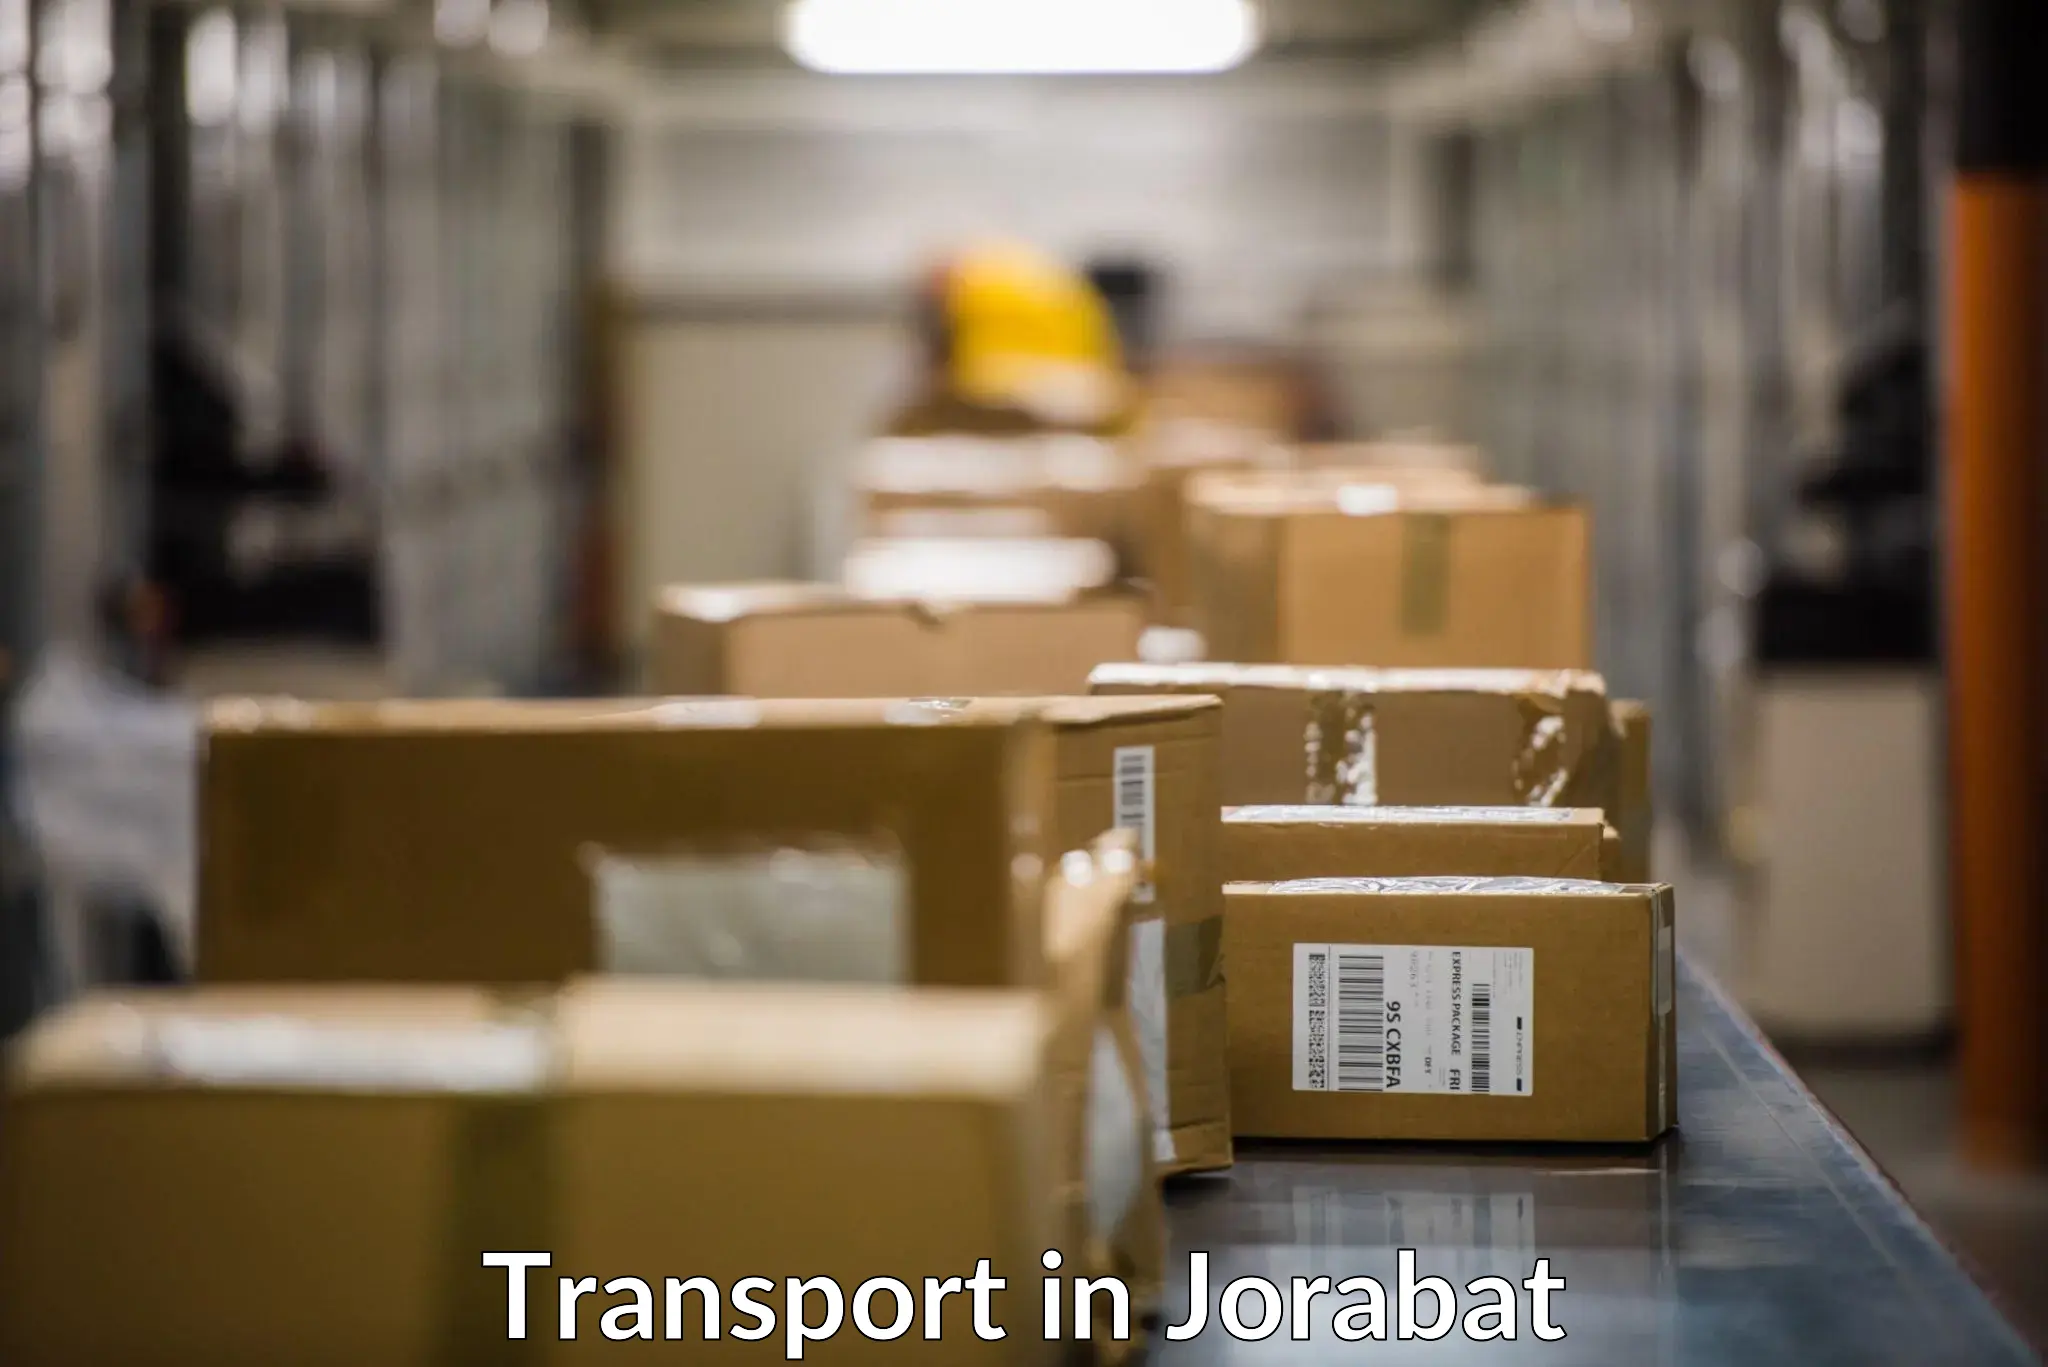 Container transport service in Jorabat